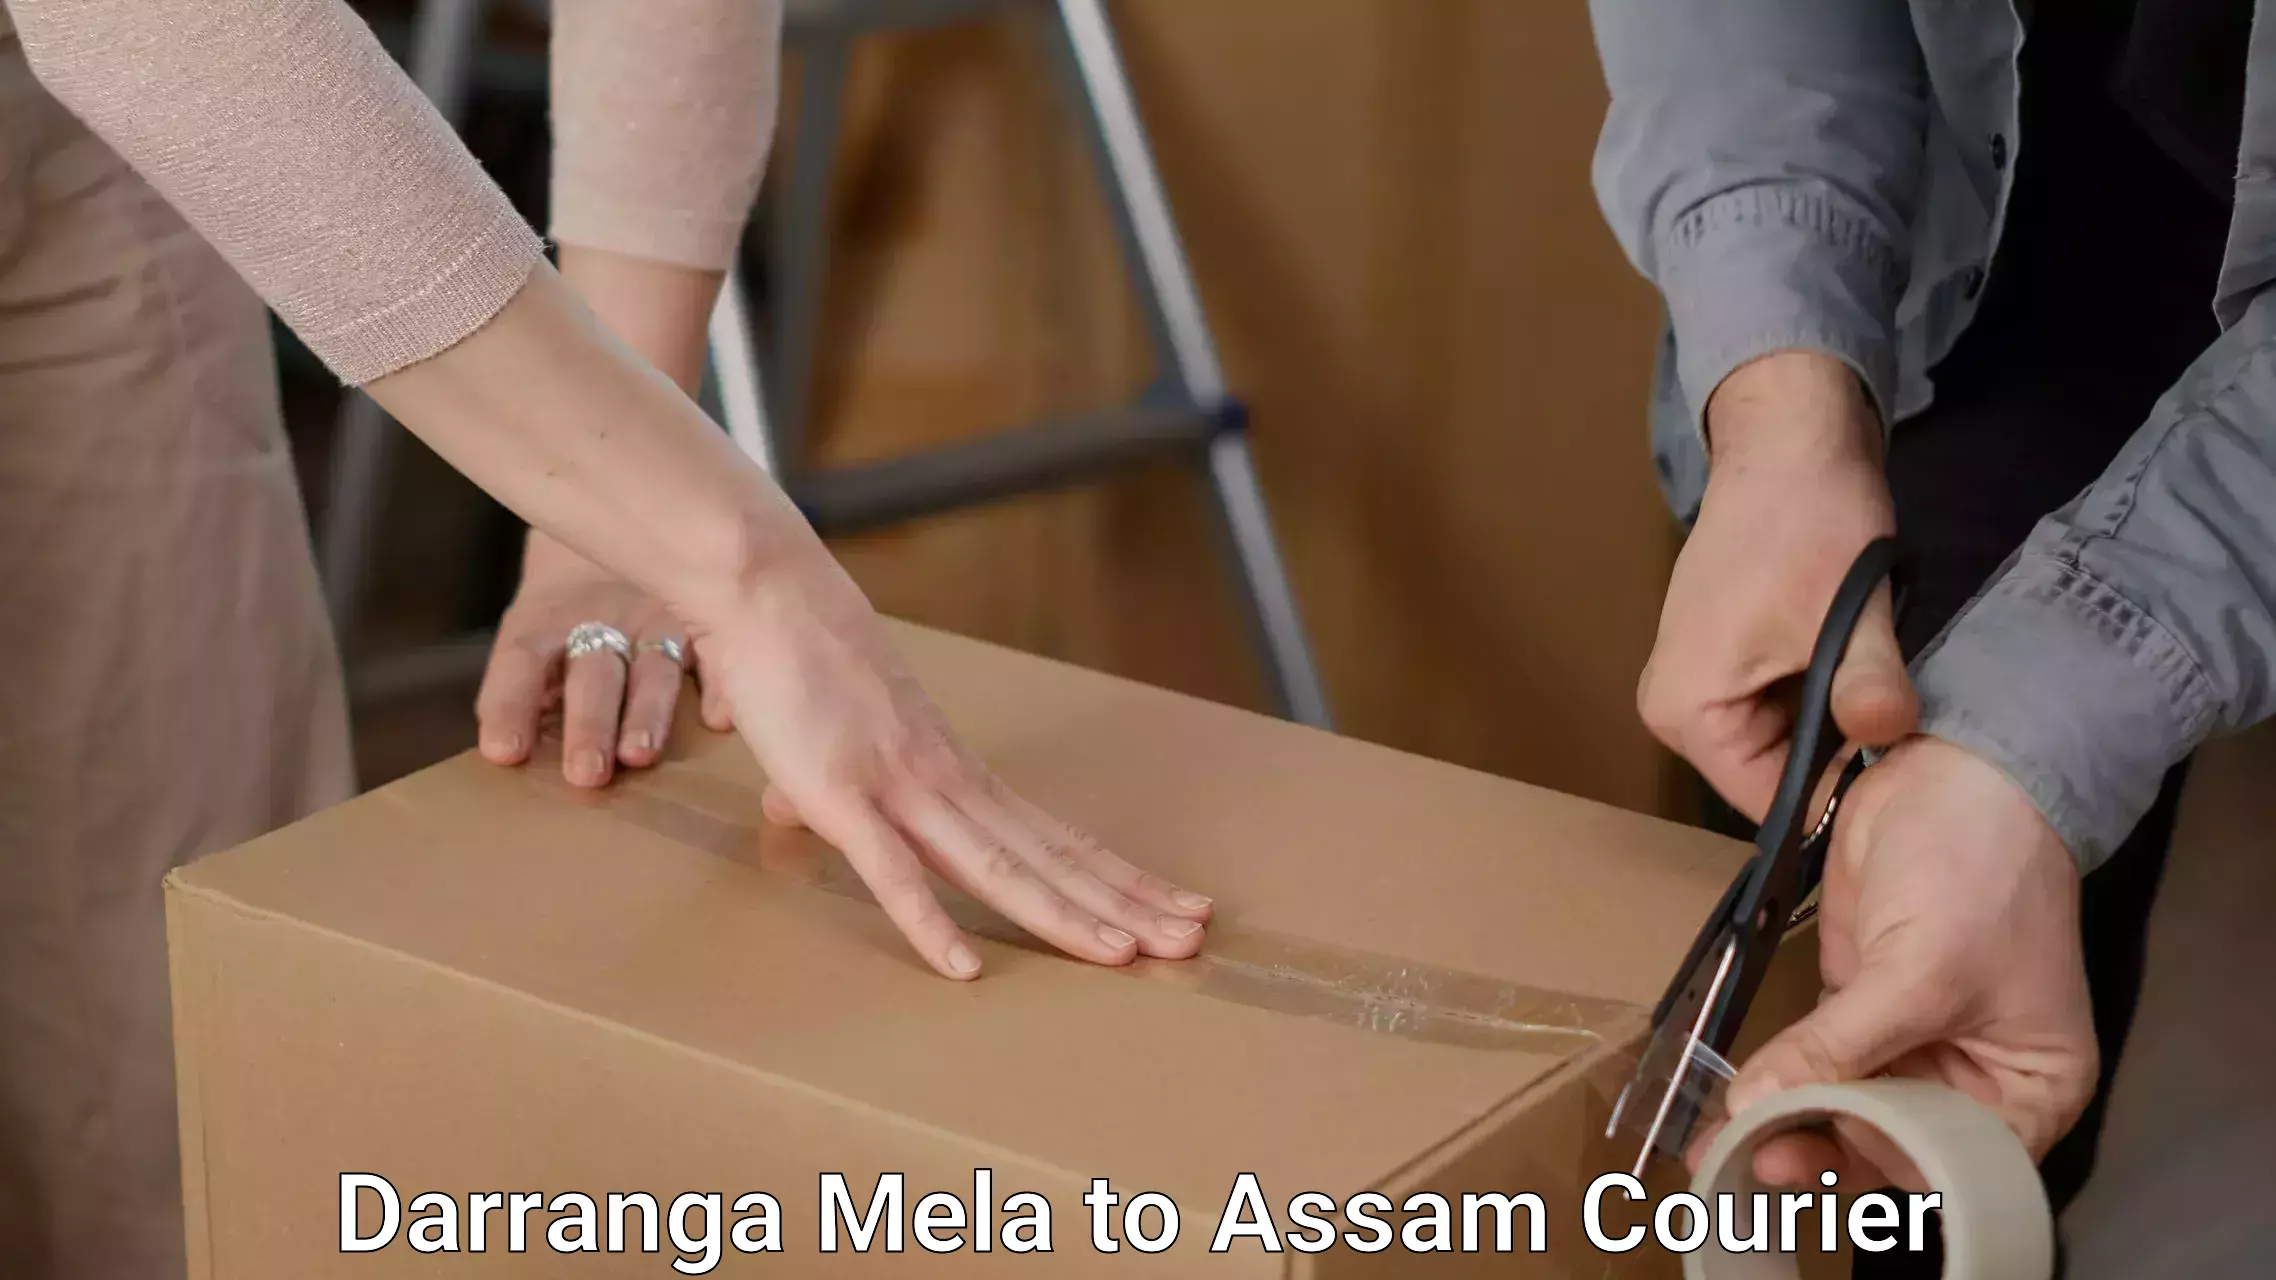 Furniture delivery service Darranga Mela to Assam